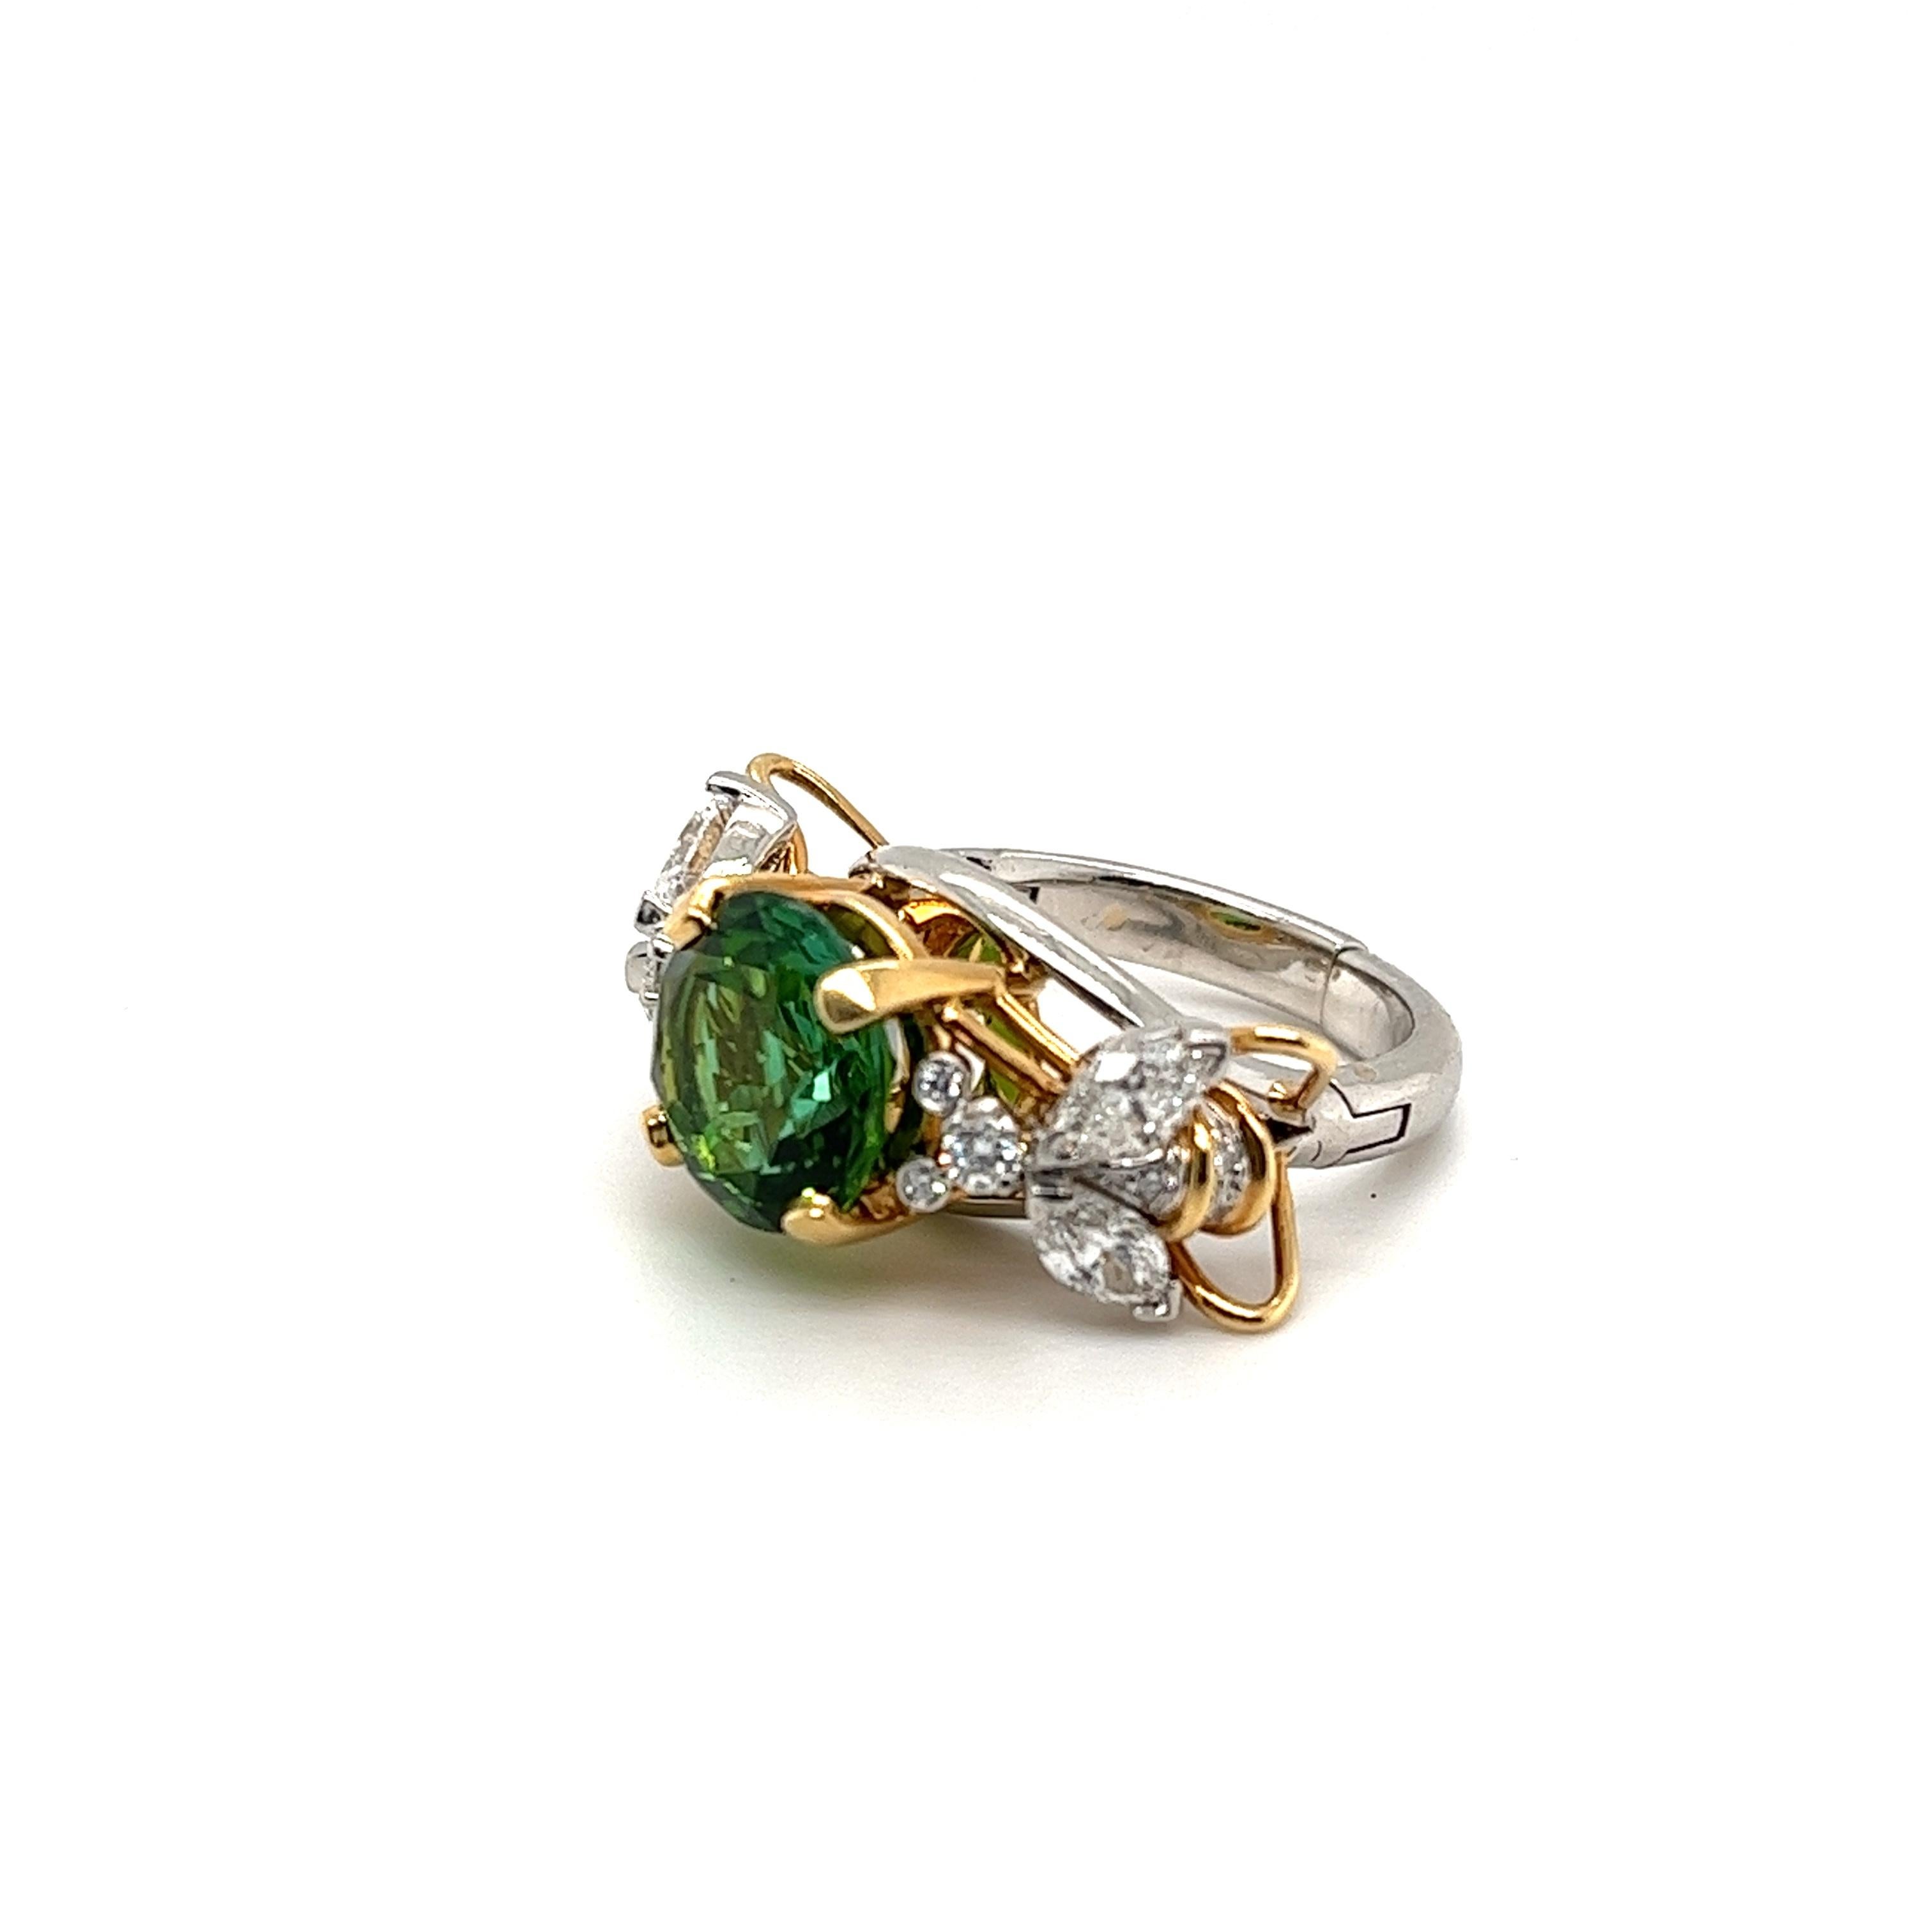 The Philosopher's Stone: Tiffany's Blue Book Green Diamond Ring